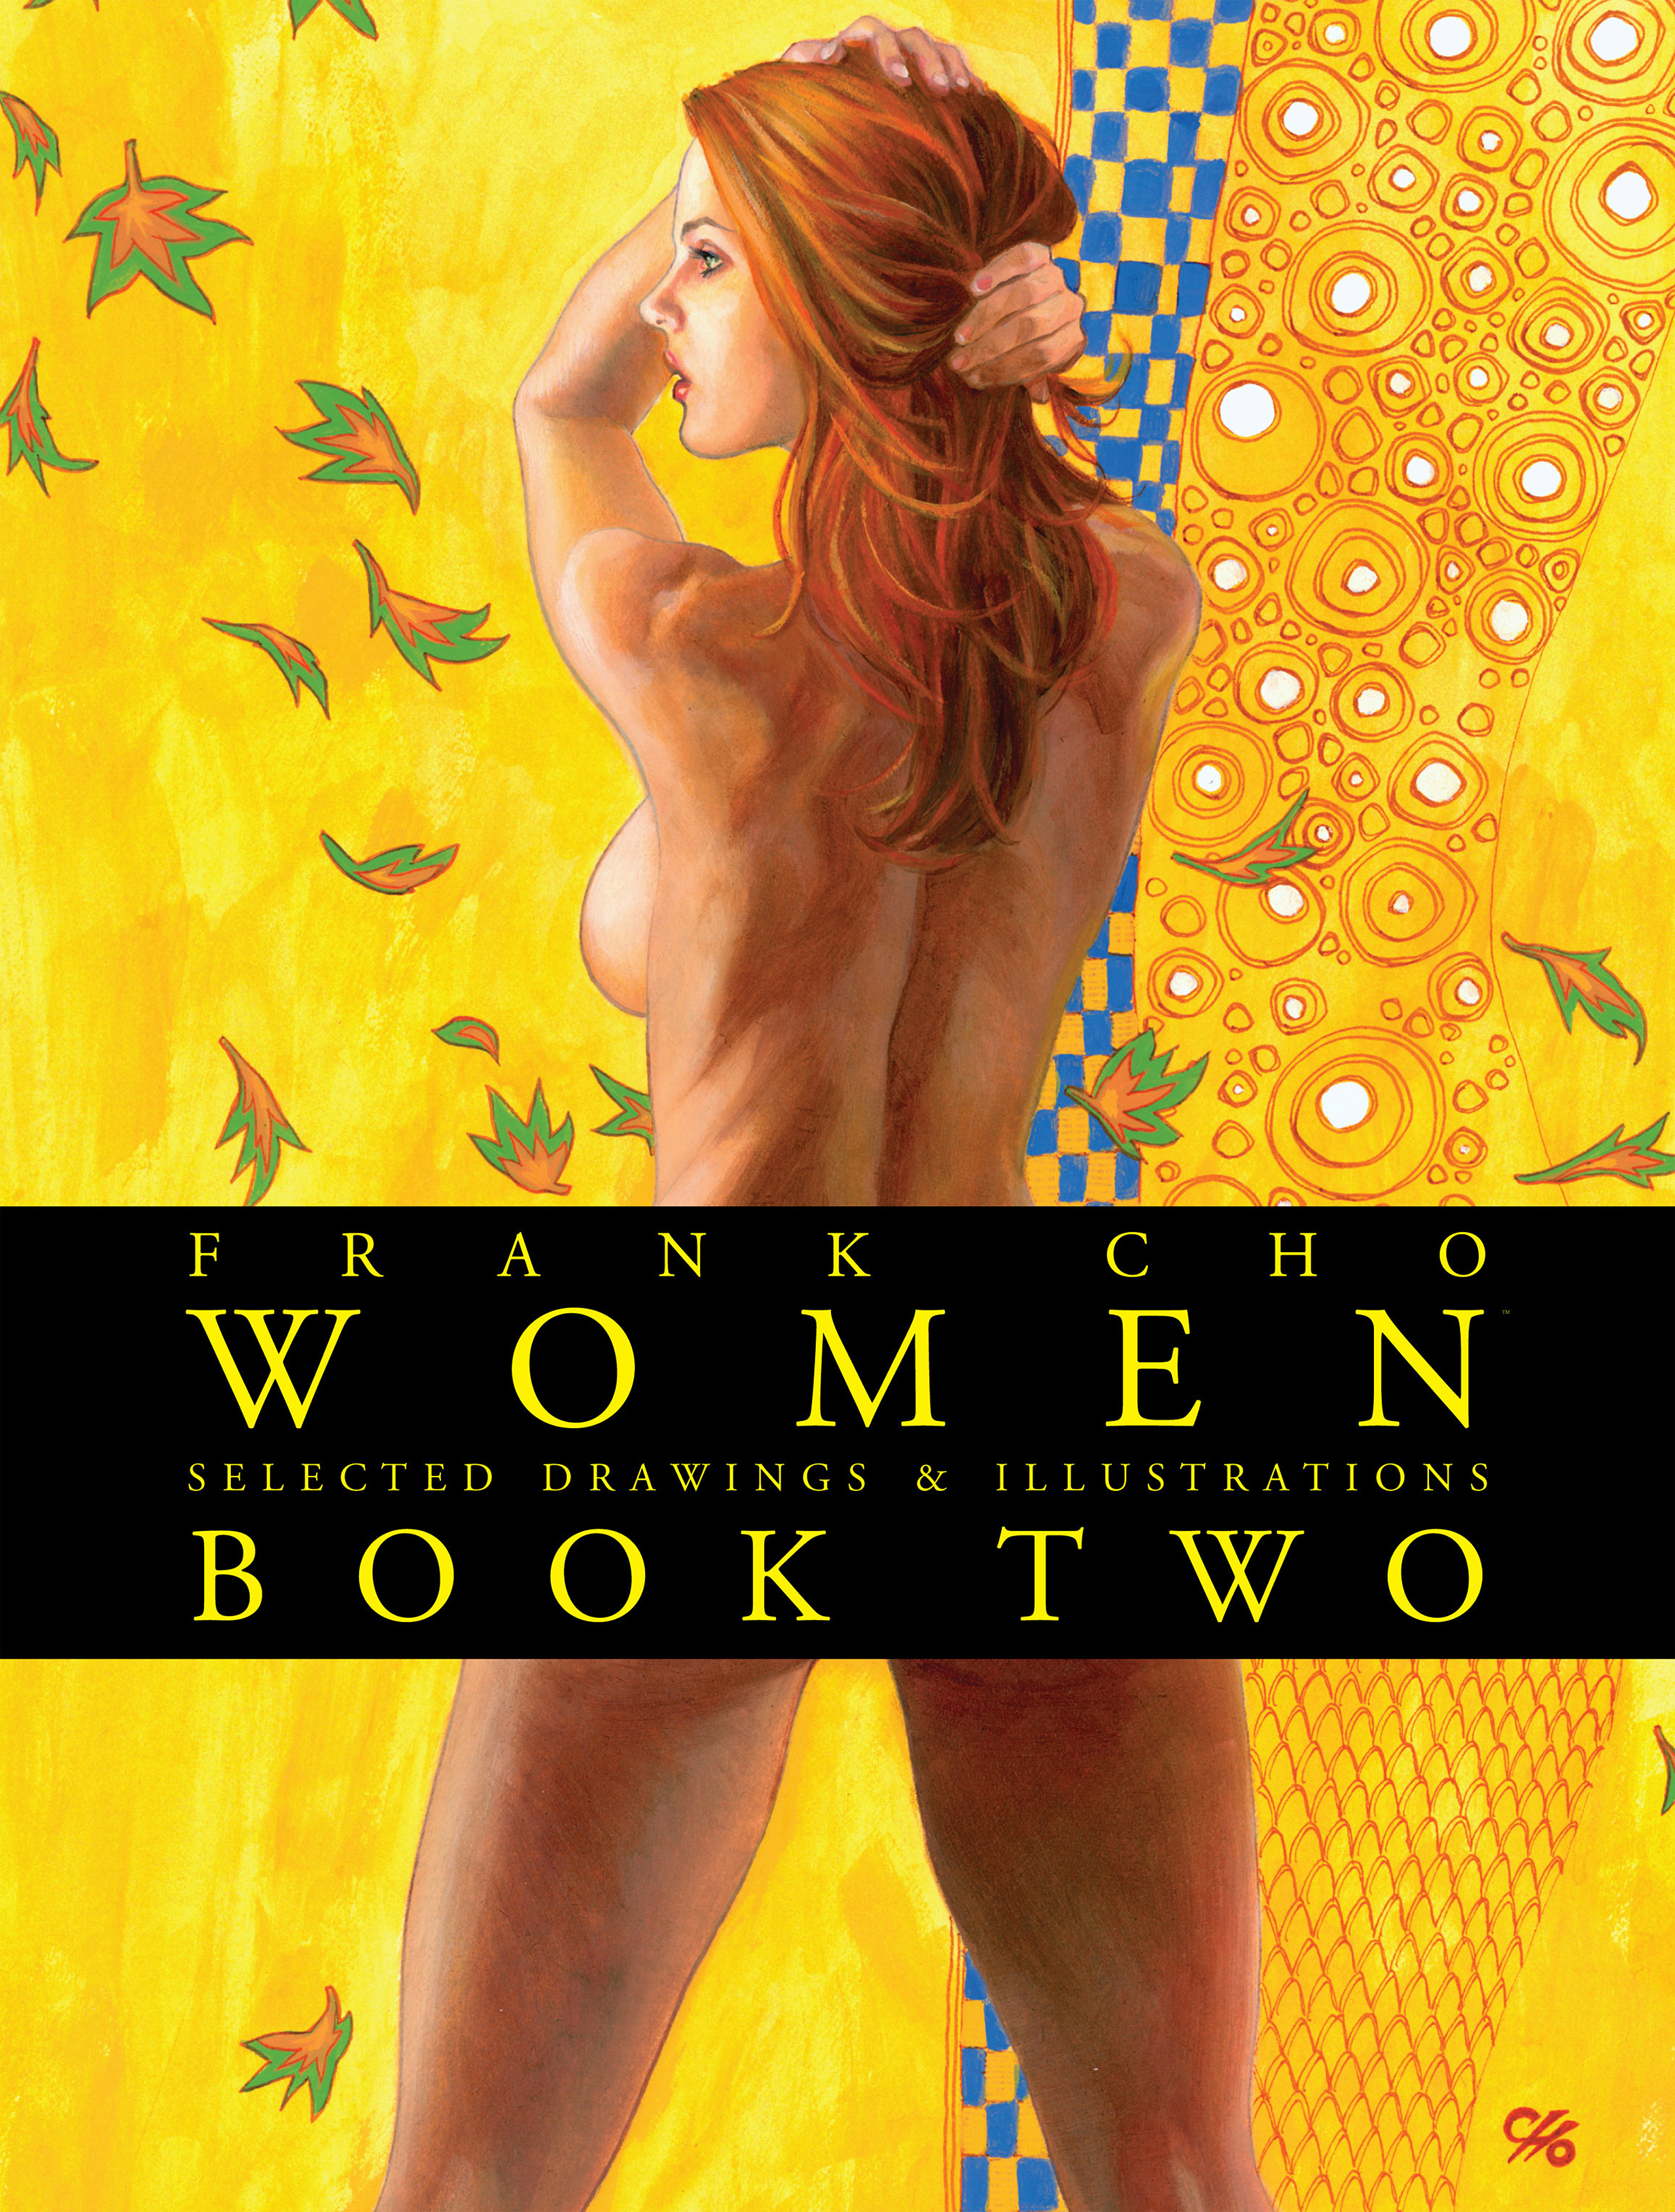 Frank Cho - Women – Selected Drawings - Book 2